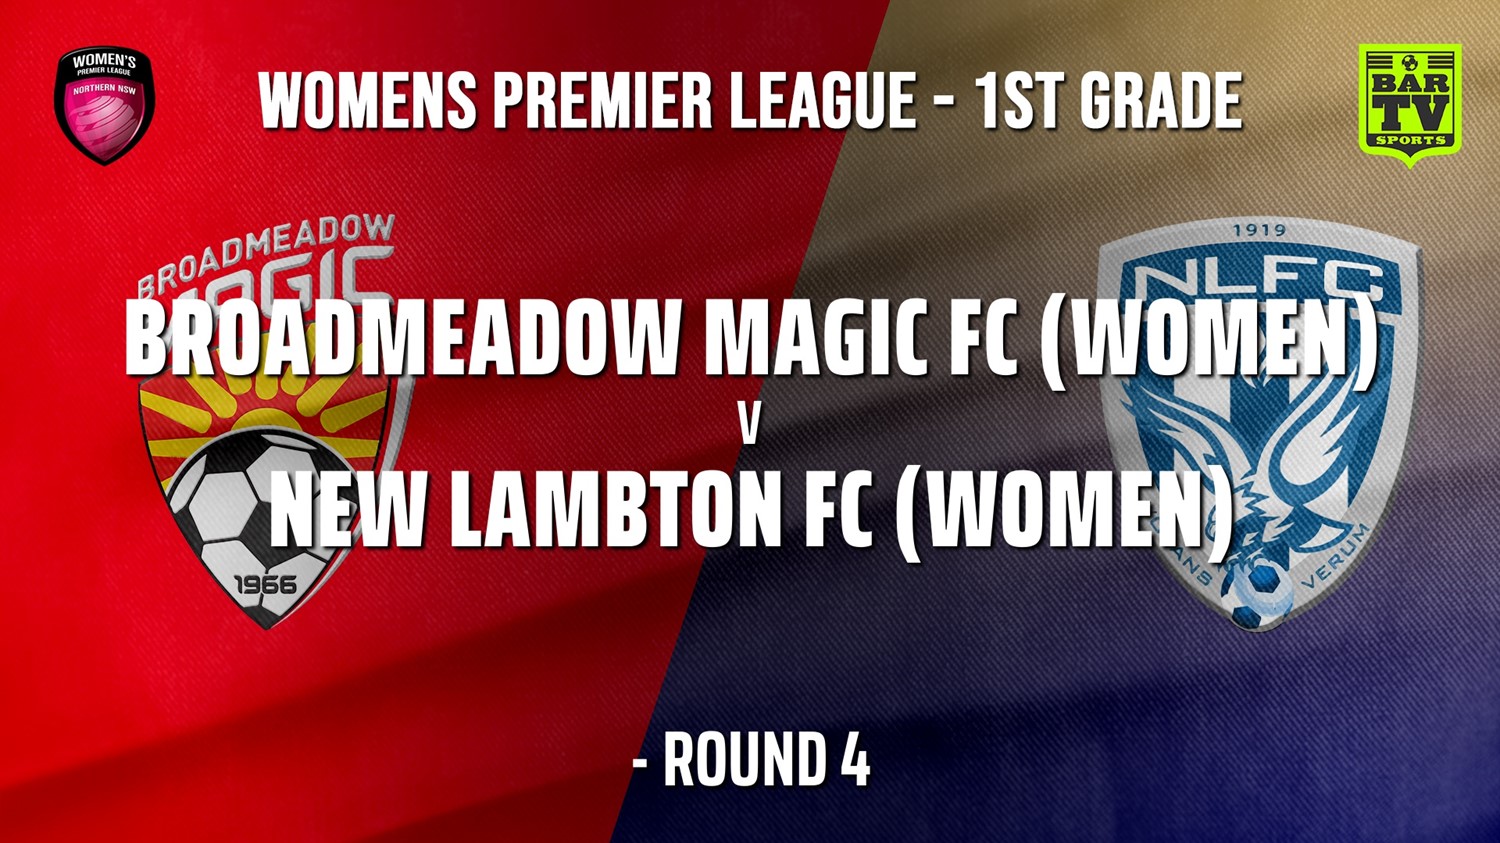 210421-Herald Women’s Premier League Round 4 - Broadmeadow Magic FC v New Lambton FC Minigame Slate Image